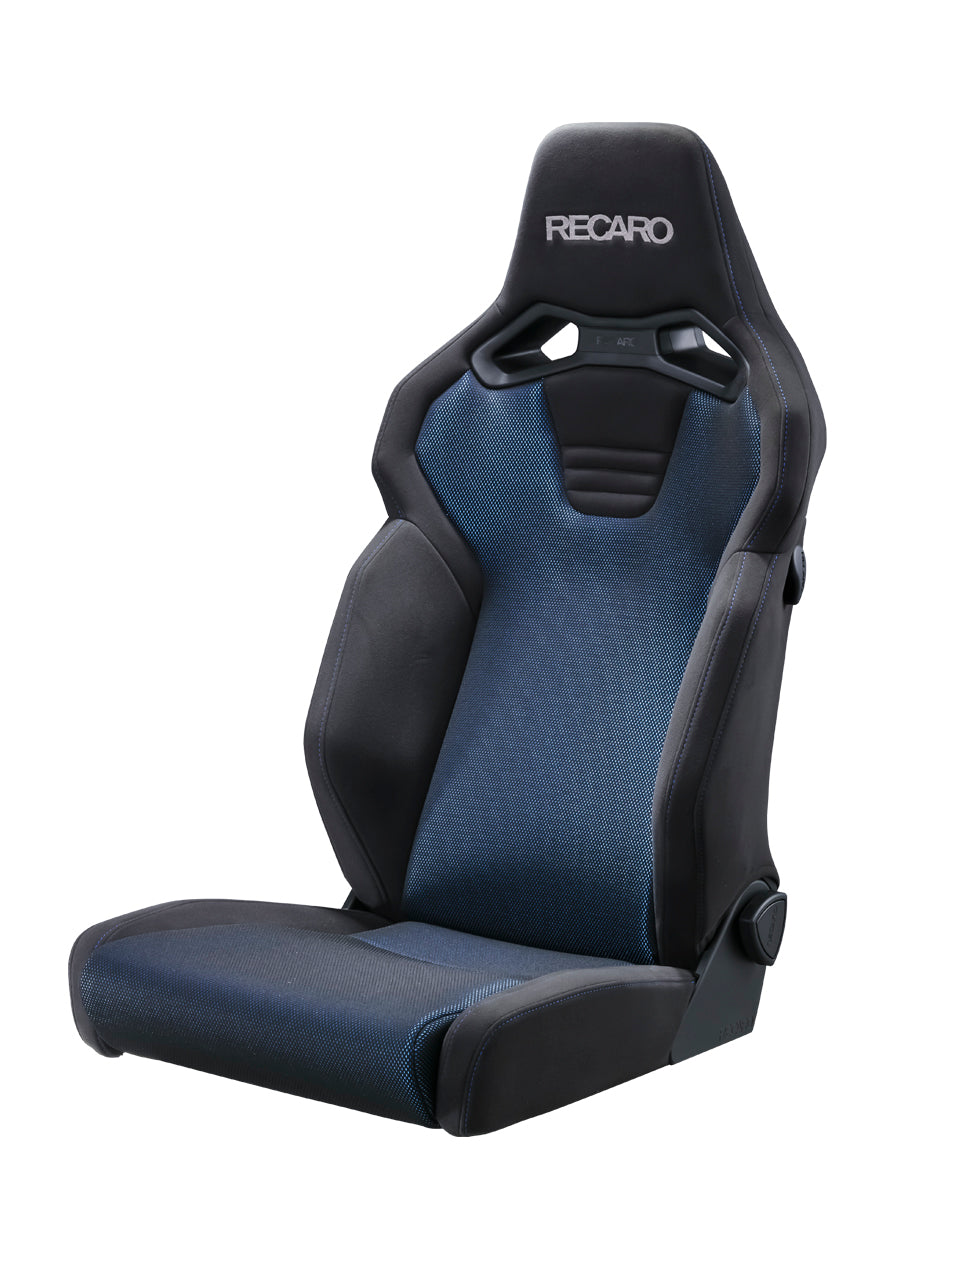 RECARO SR-C BK100 BL BK BRILLIANT MESH BLUE AND KAMUI BLACK COLOR SEAT FOR  81-121.20.643-0